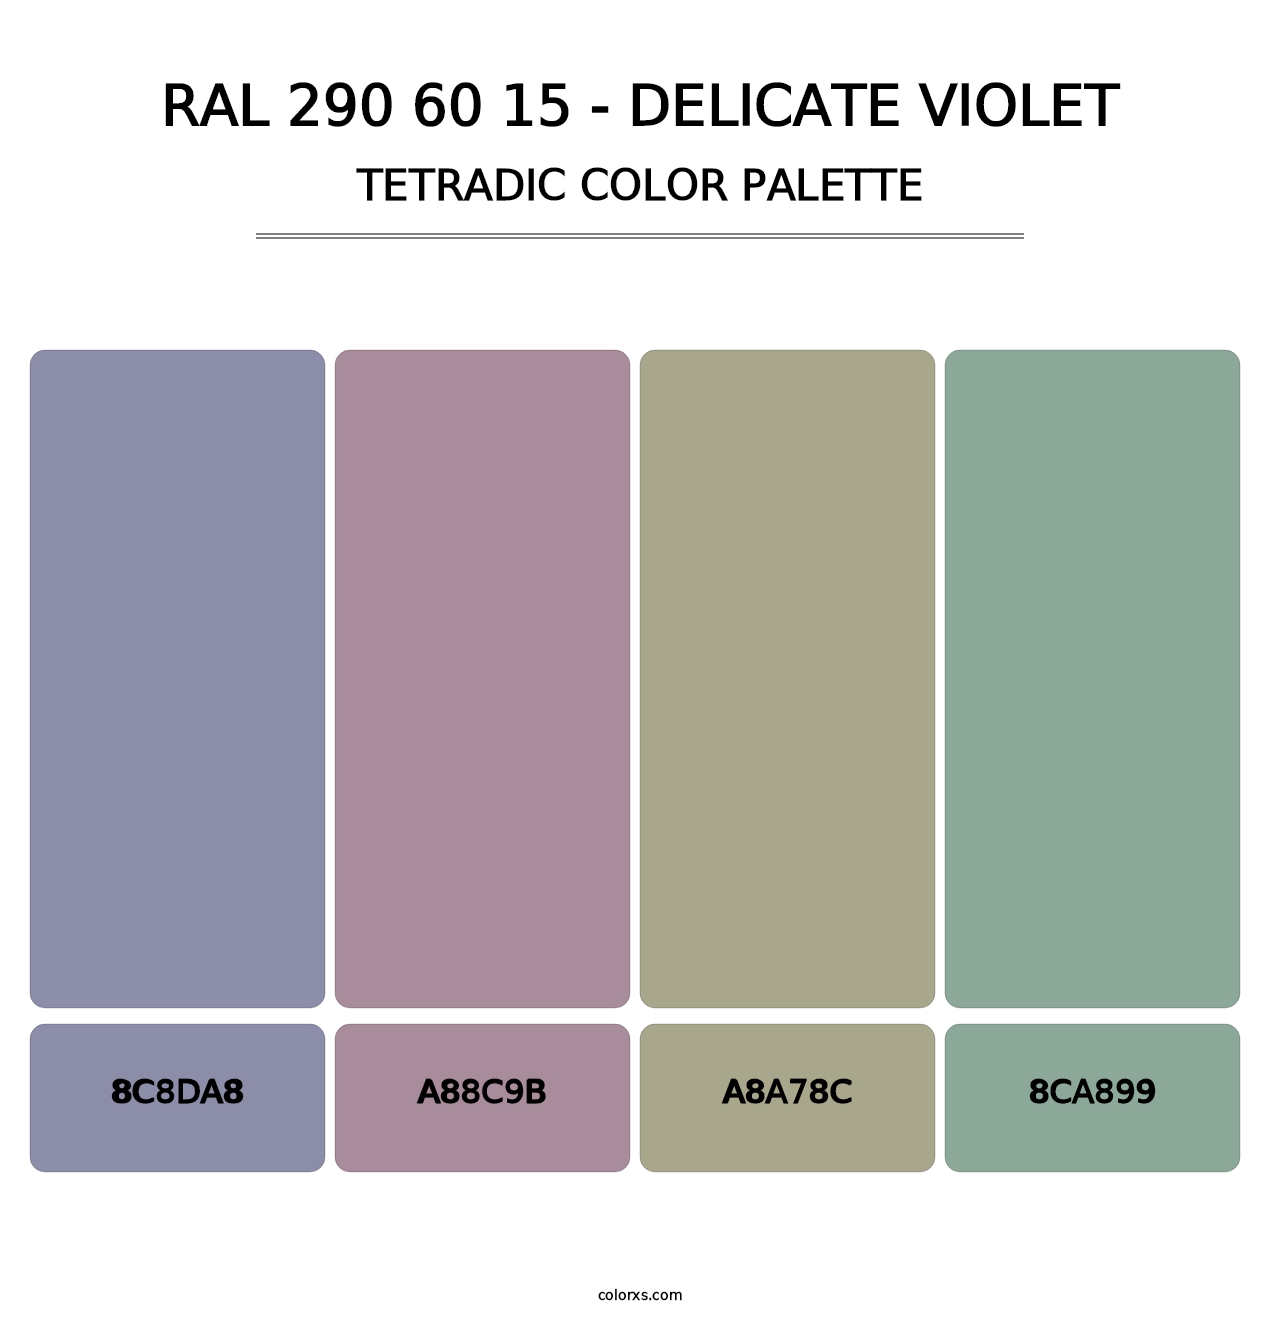 RAL 290 60 15 - Delicate Violet - Tetradic Color Palette